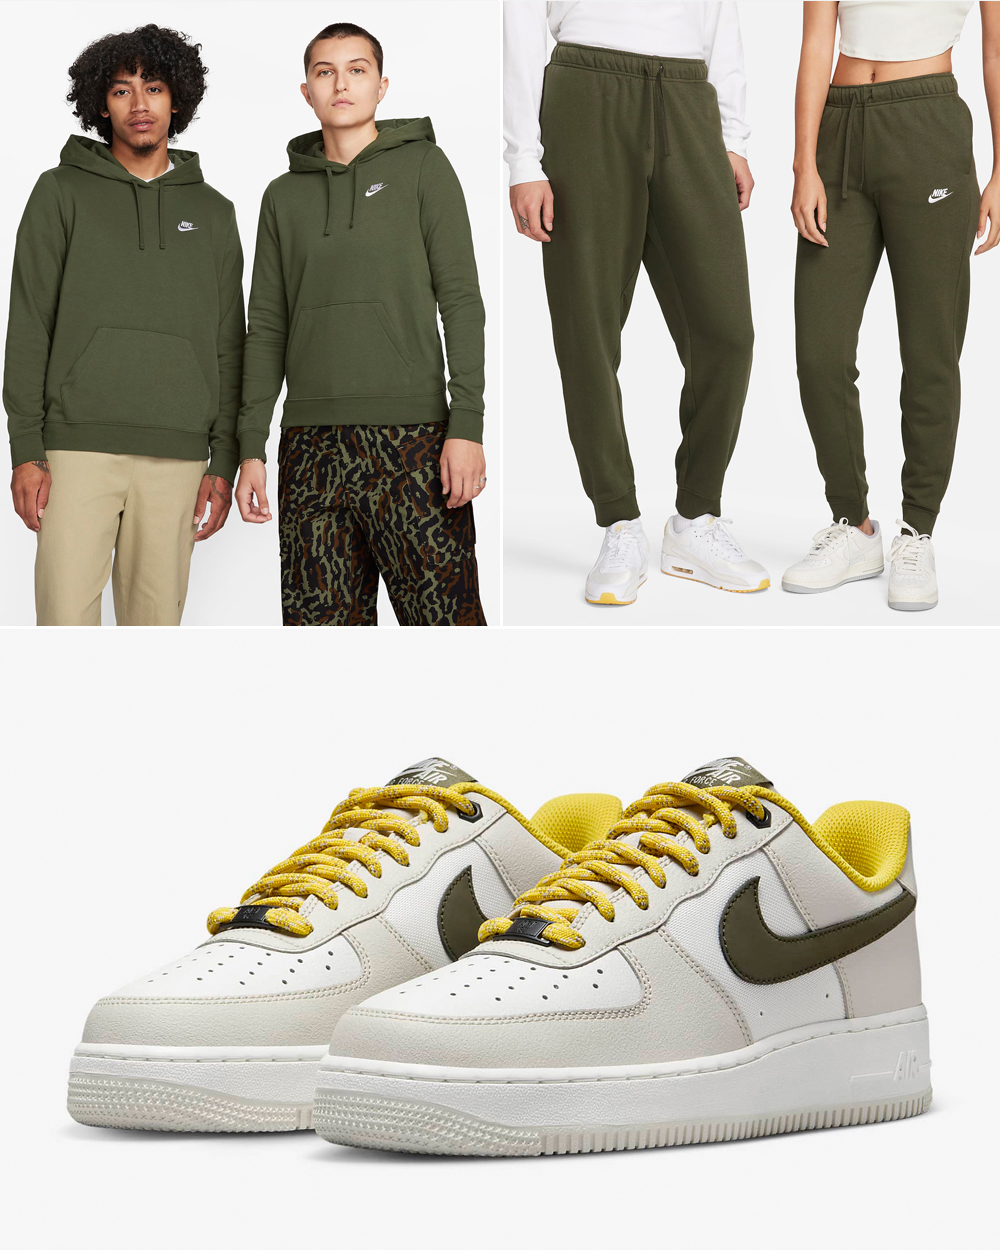 Nike-Air-Force-1-07-Low-Light-Bone-Cargo-Khaki-Outfits-2